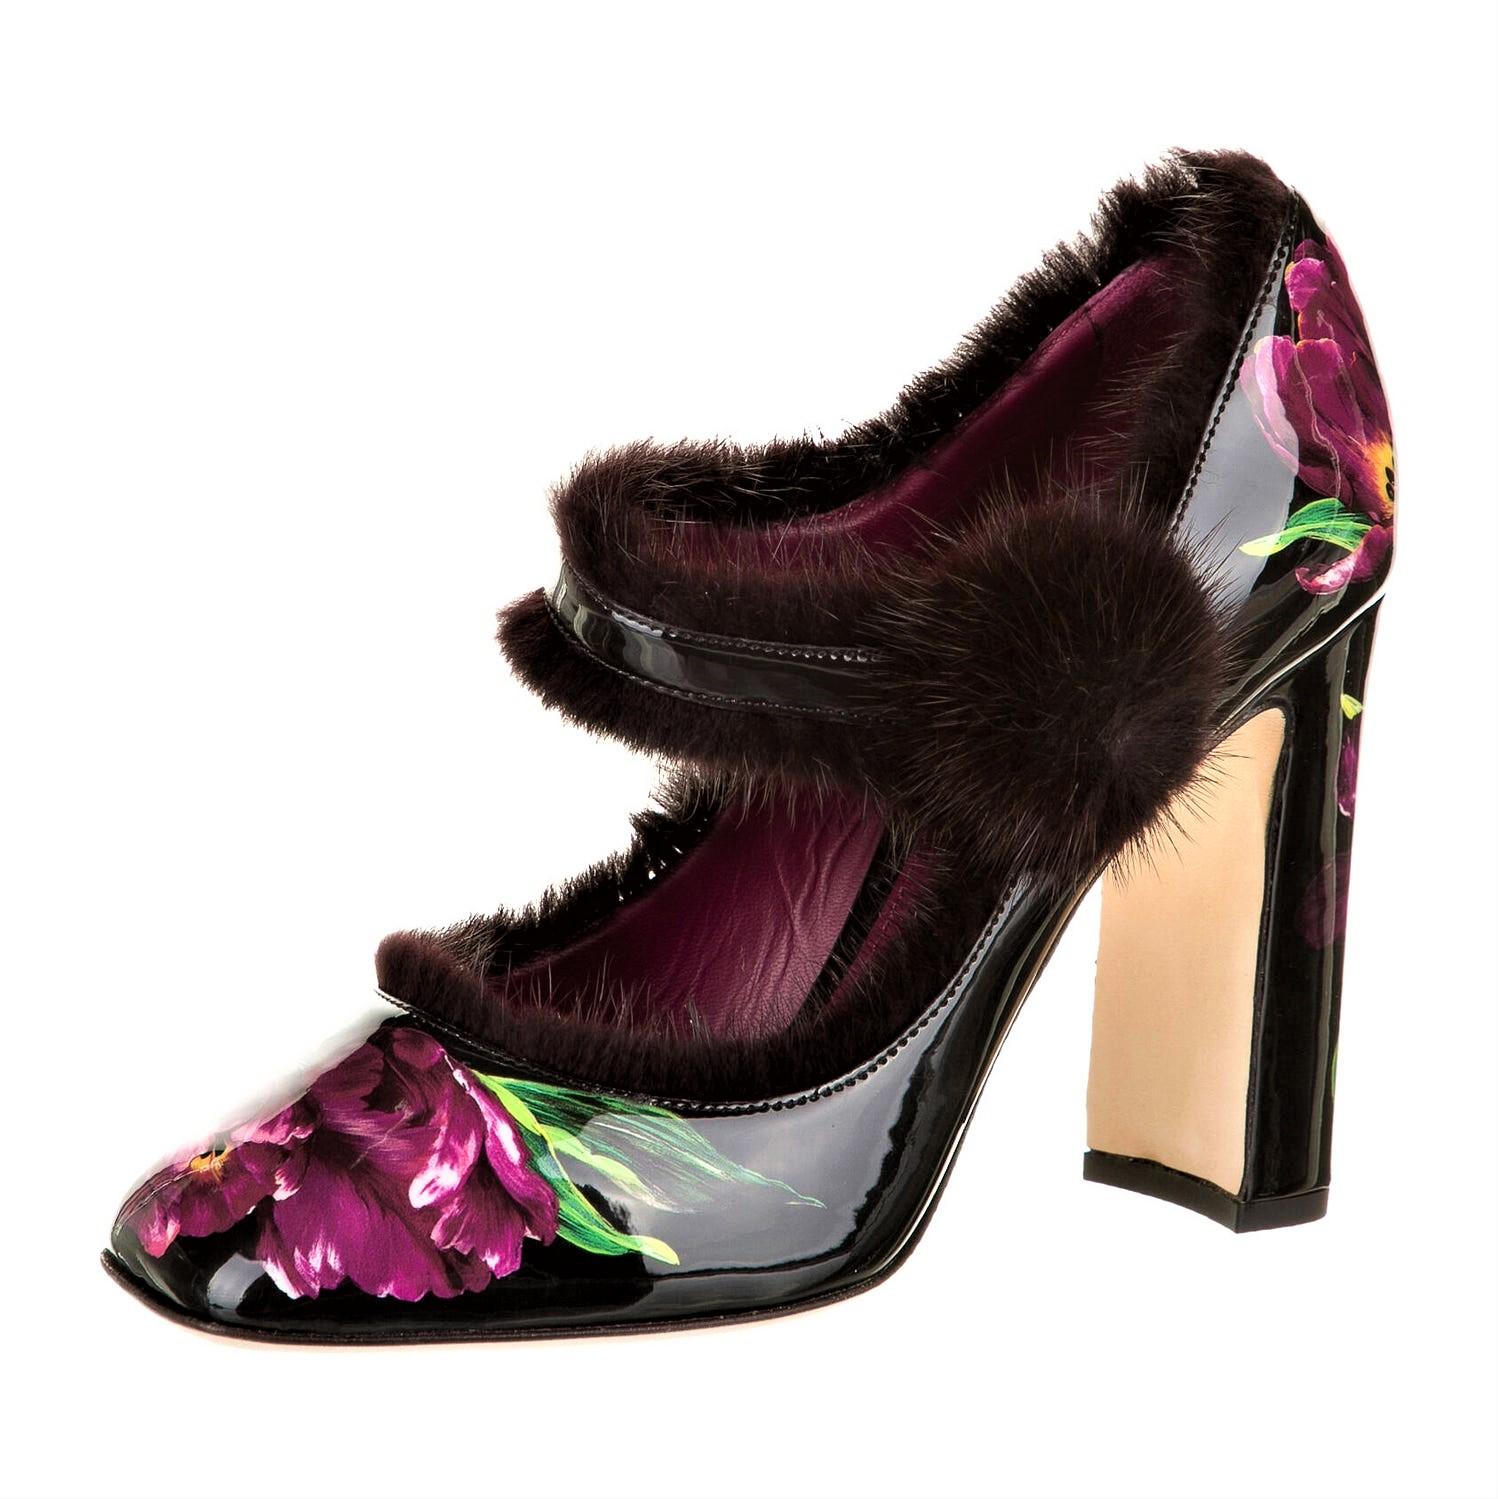 New Dolce & Gabbana Patent Leather Mink Pumps Heels Fall 2016 Sz 38.5 2